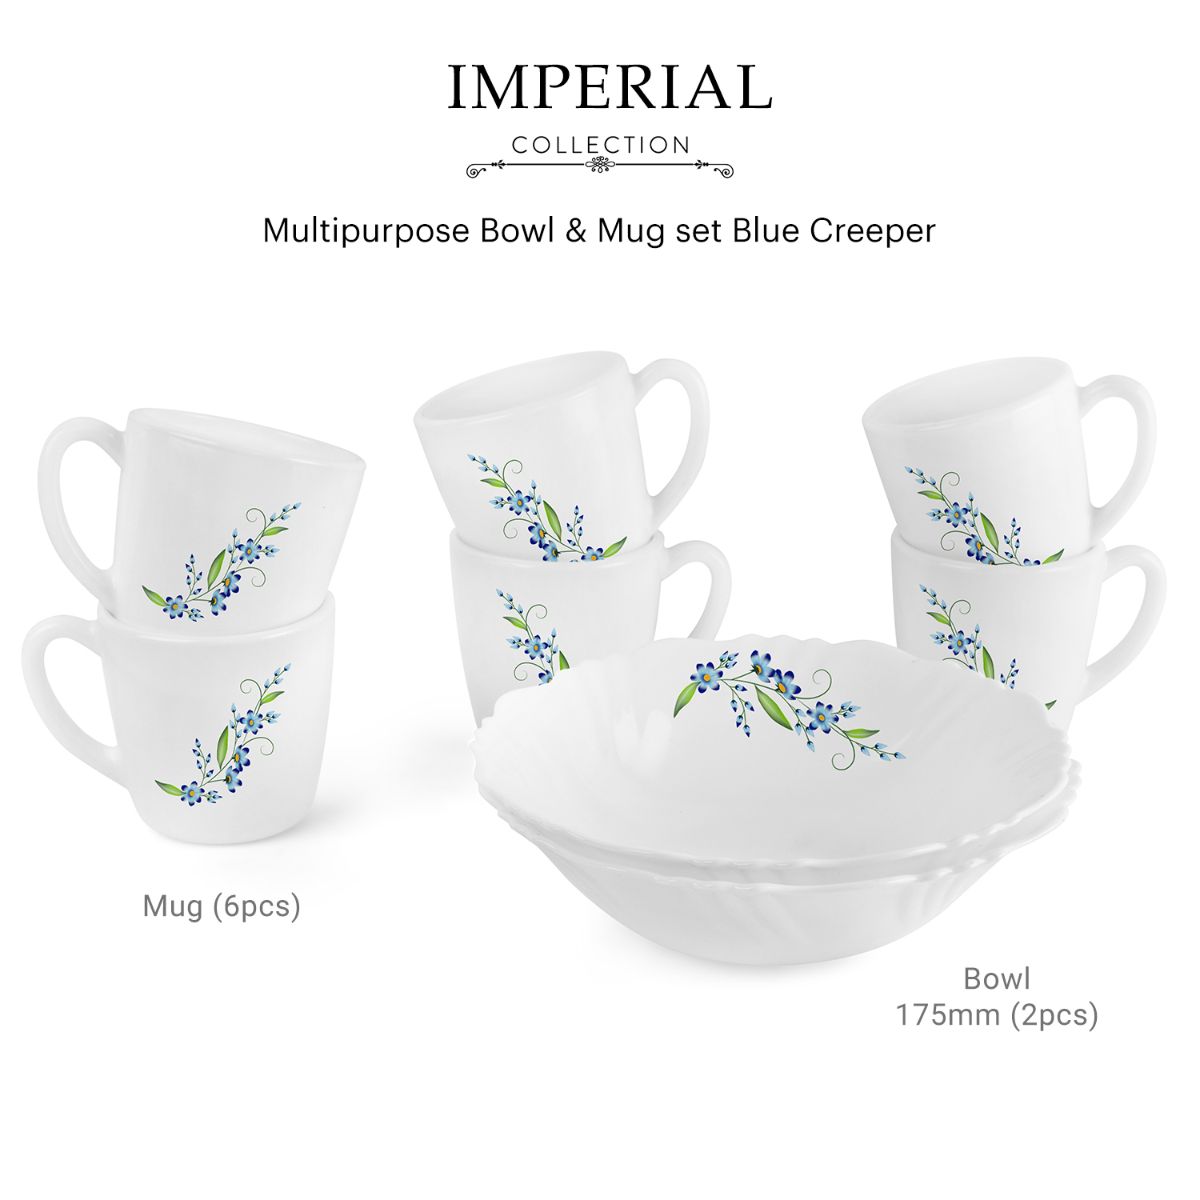 Imperial Series Quick Bite Bowl & Mug Gift set, 8 Pieces Blue Creeper / 8 Pieces